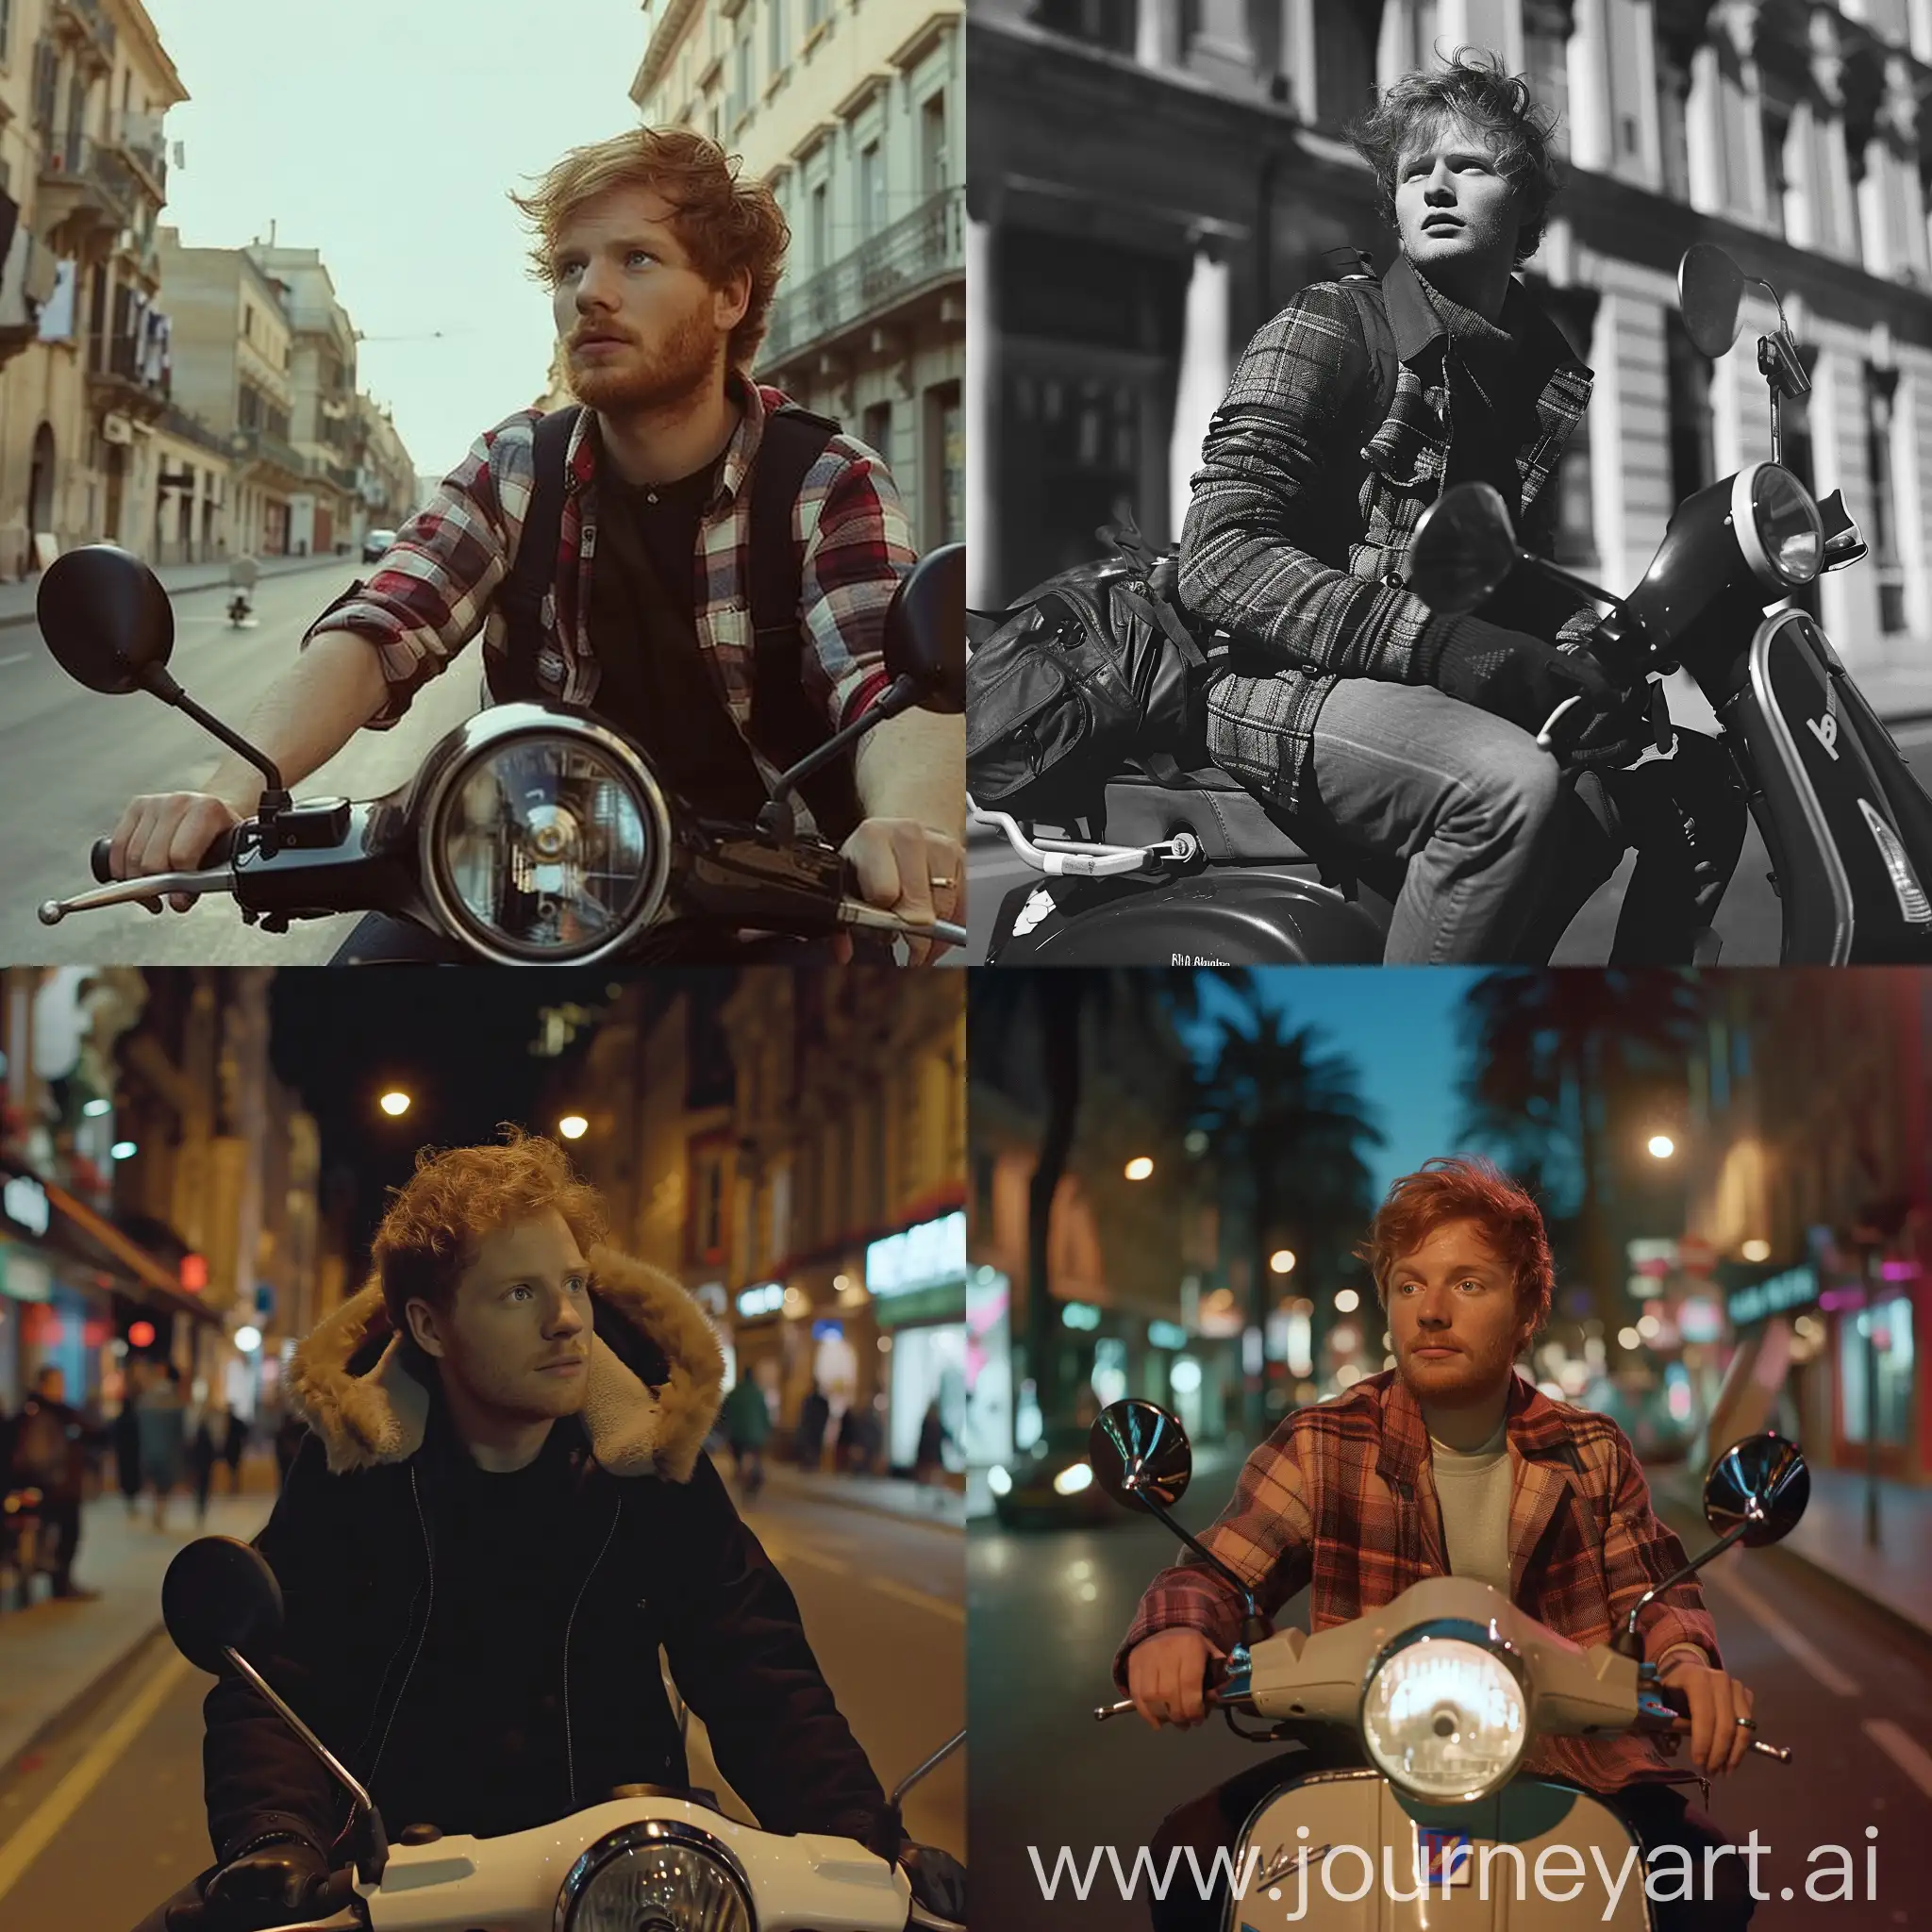 Ed-Sheeran-Riding-on-a-Moped-Seat